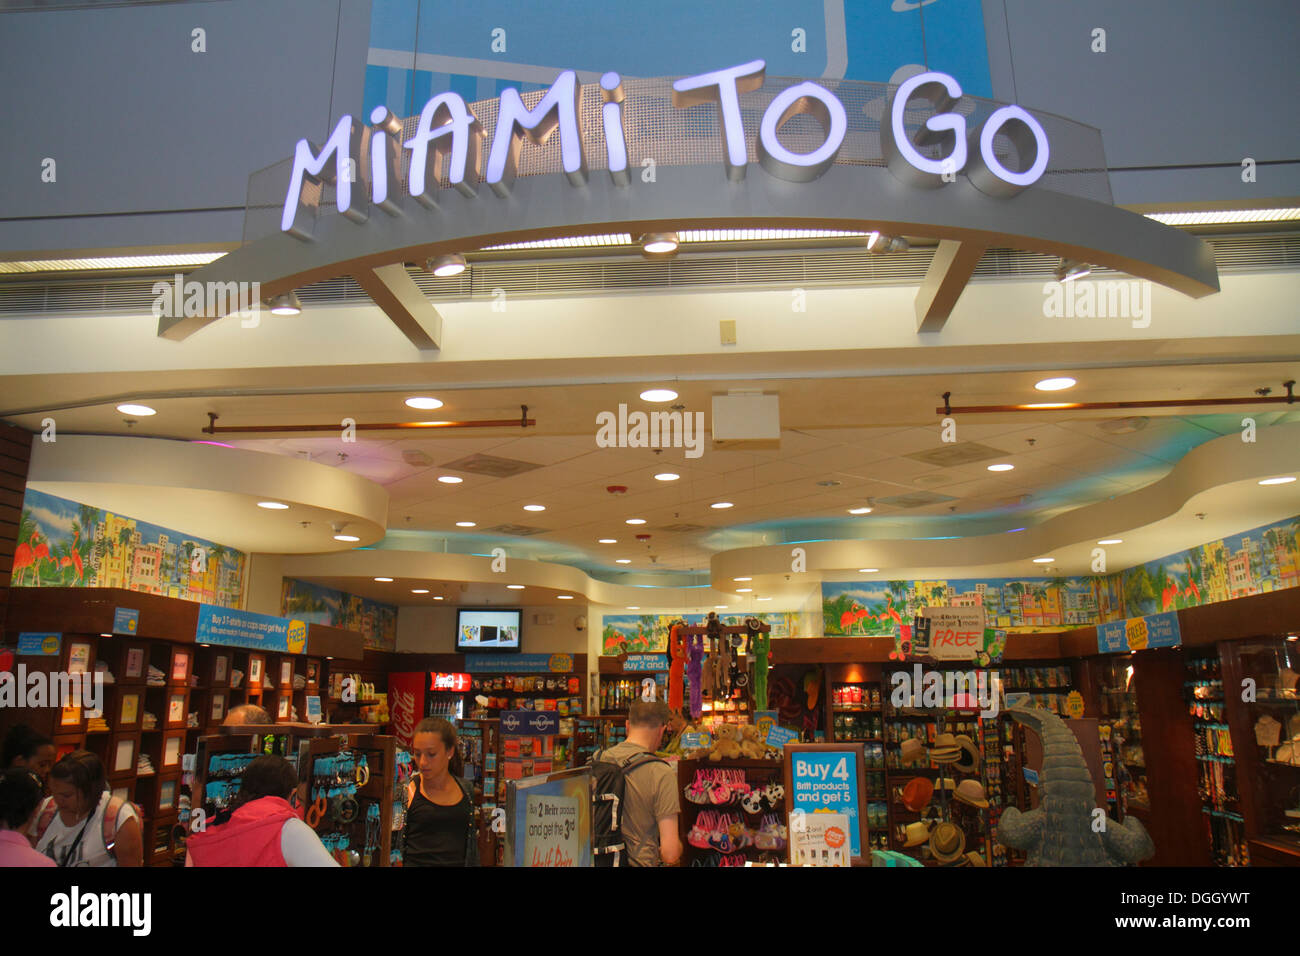 Miami Florida International Airport MIA,terminal,gate,shopping shopper shoppers shop shops market markets marketplace buying selling,retail store stor Stock Photo